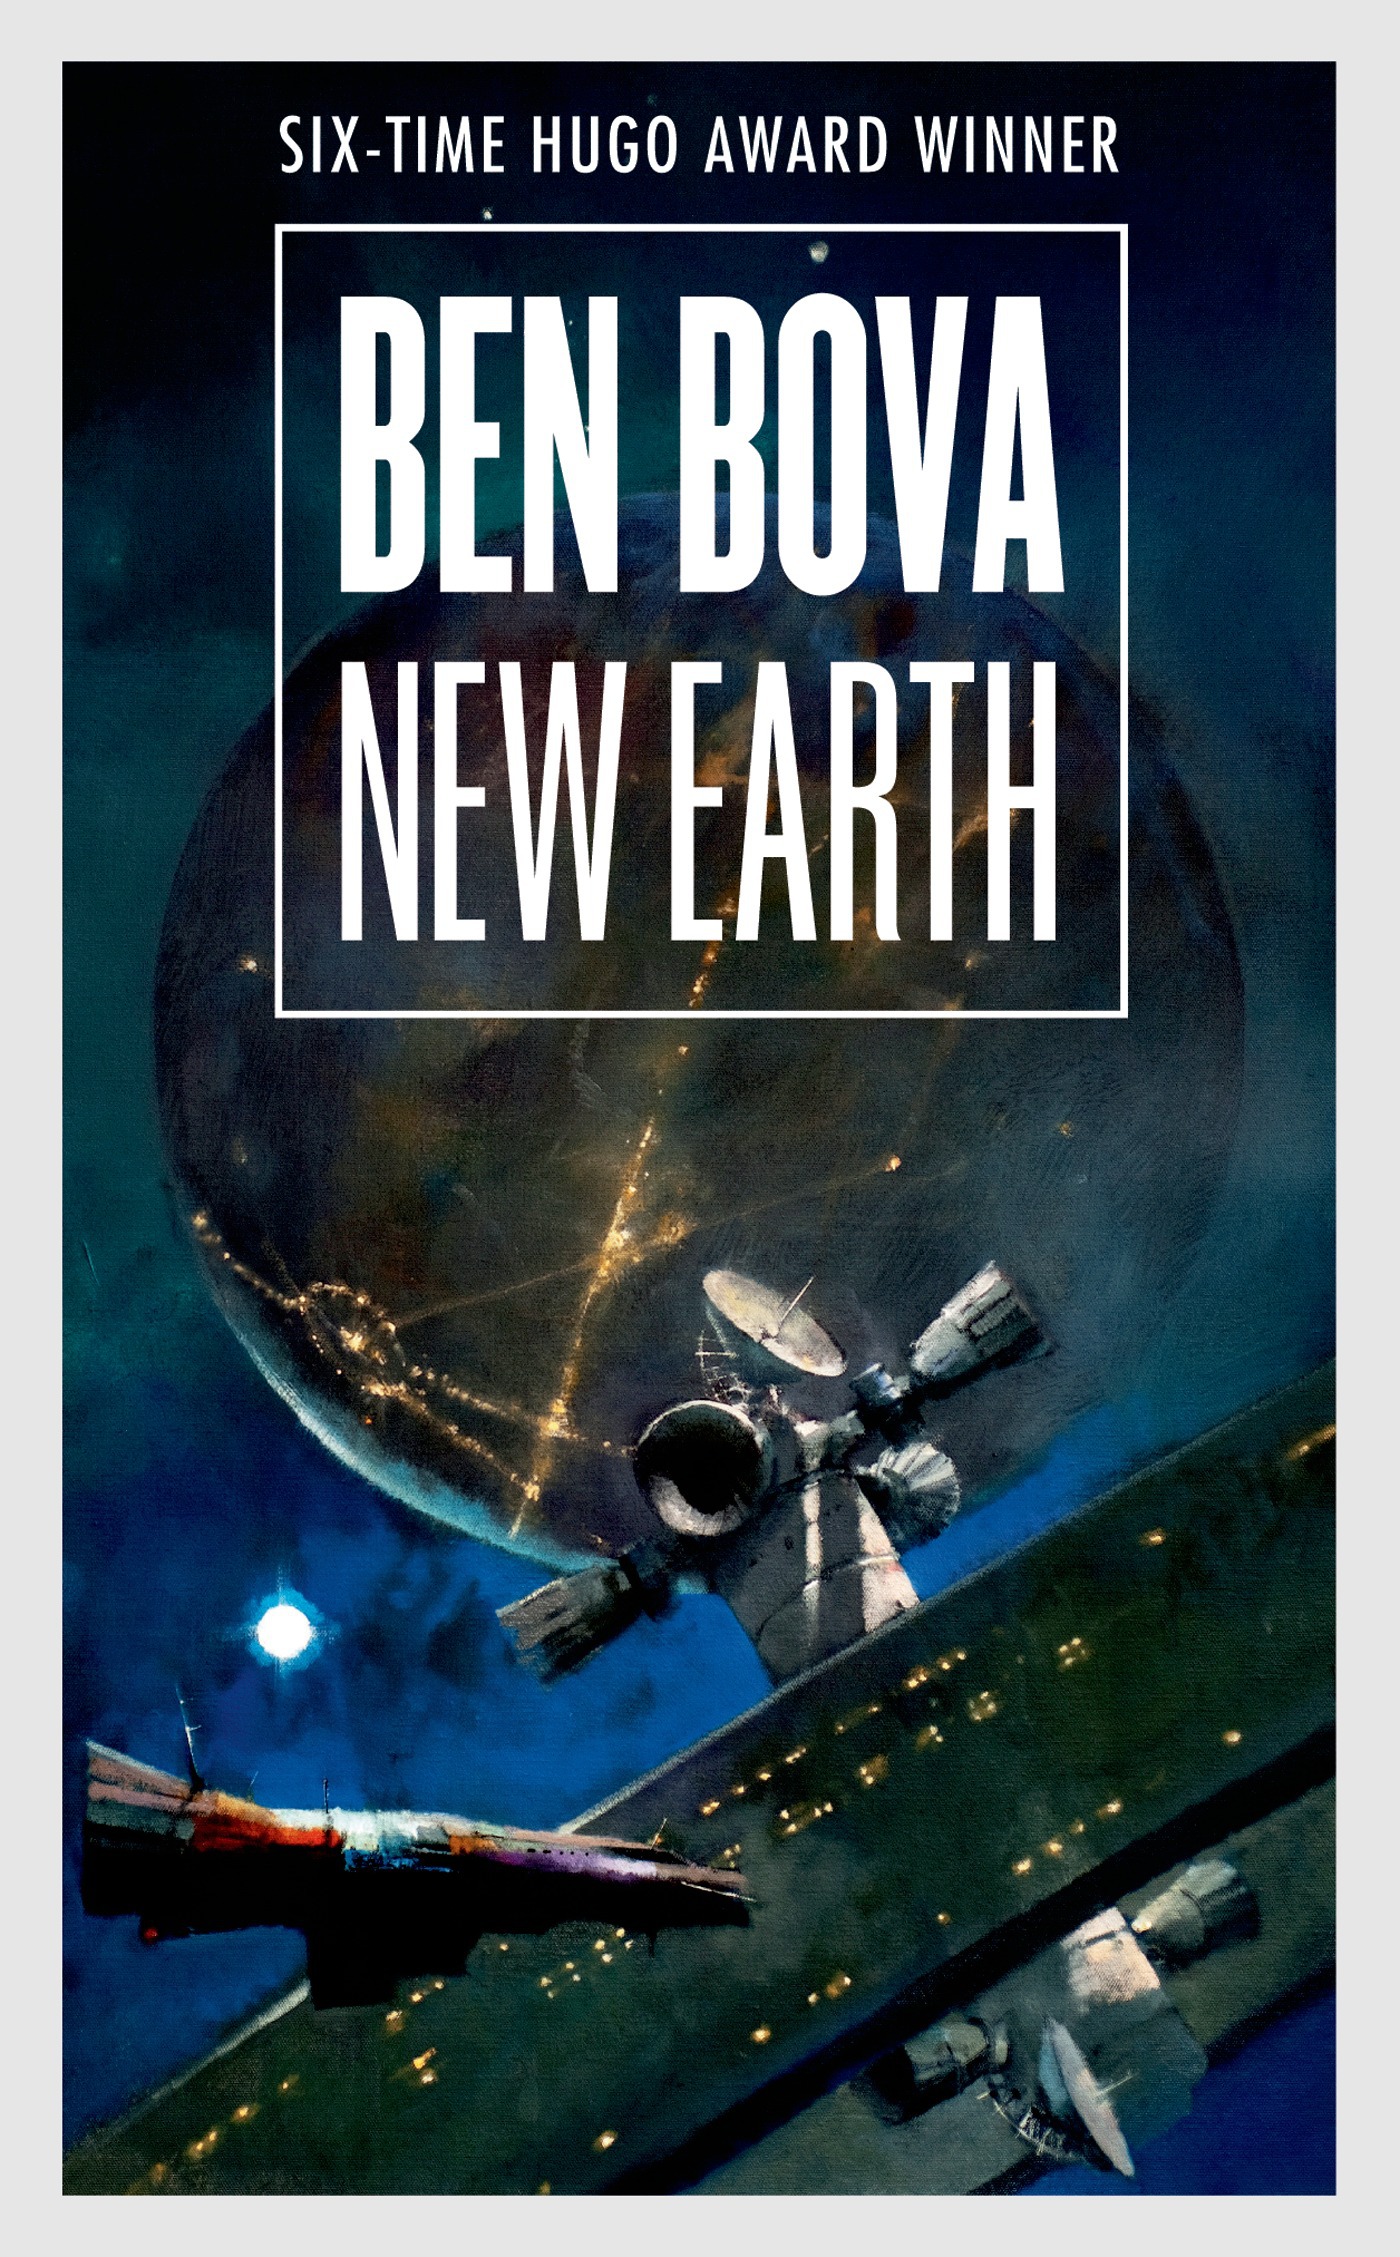 New Earth by Ben Bova